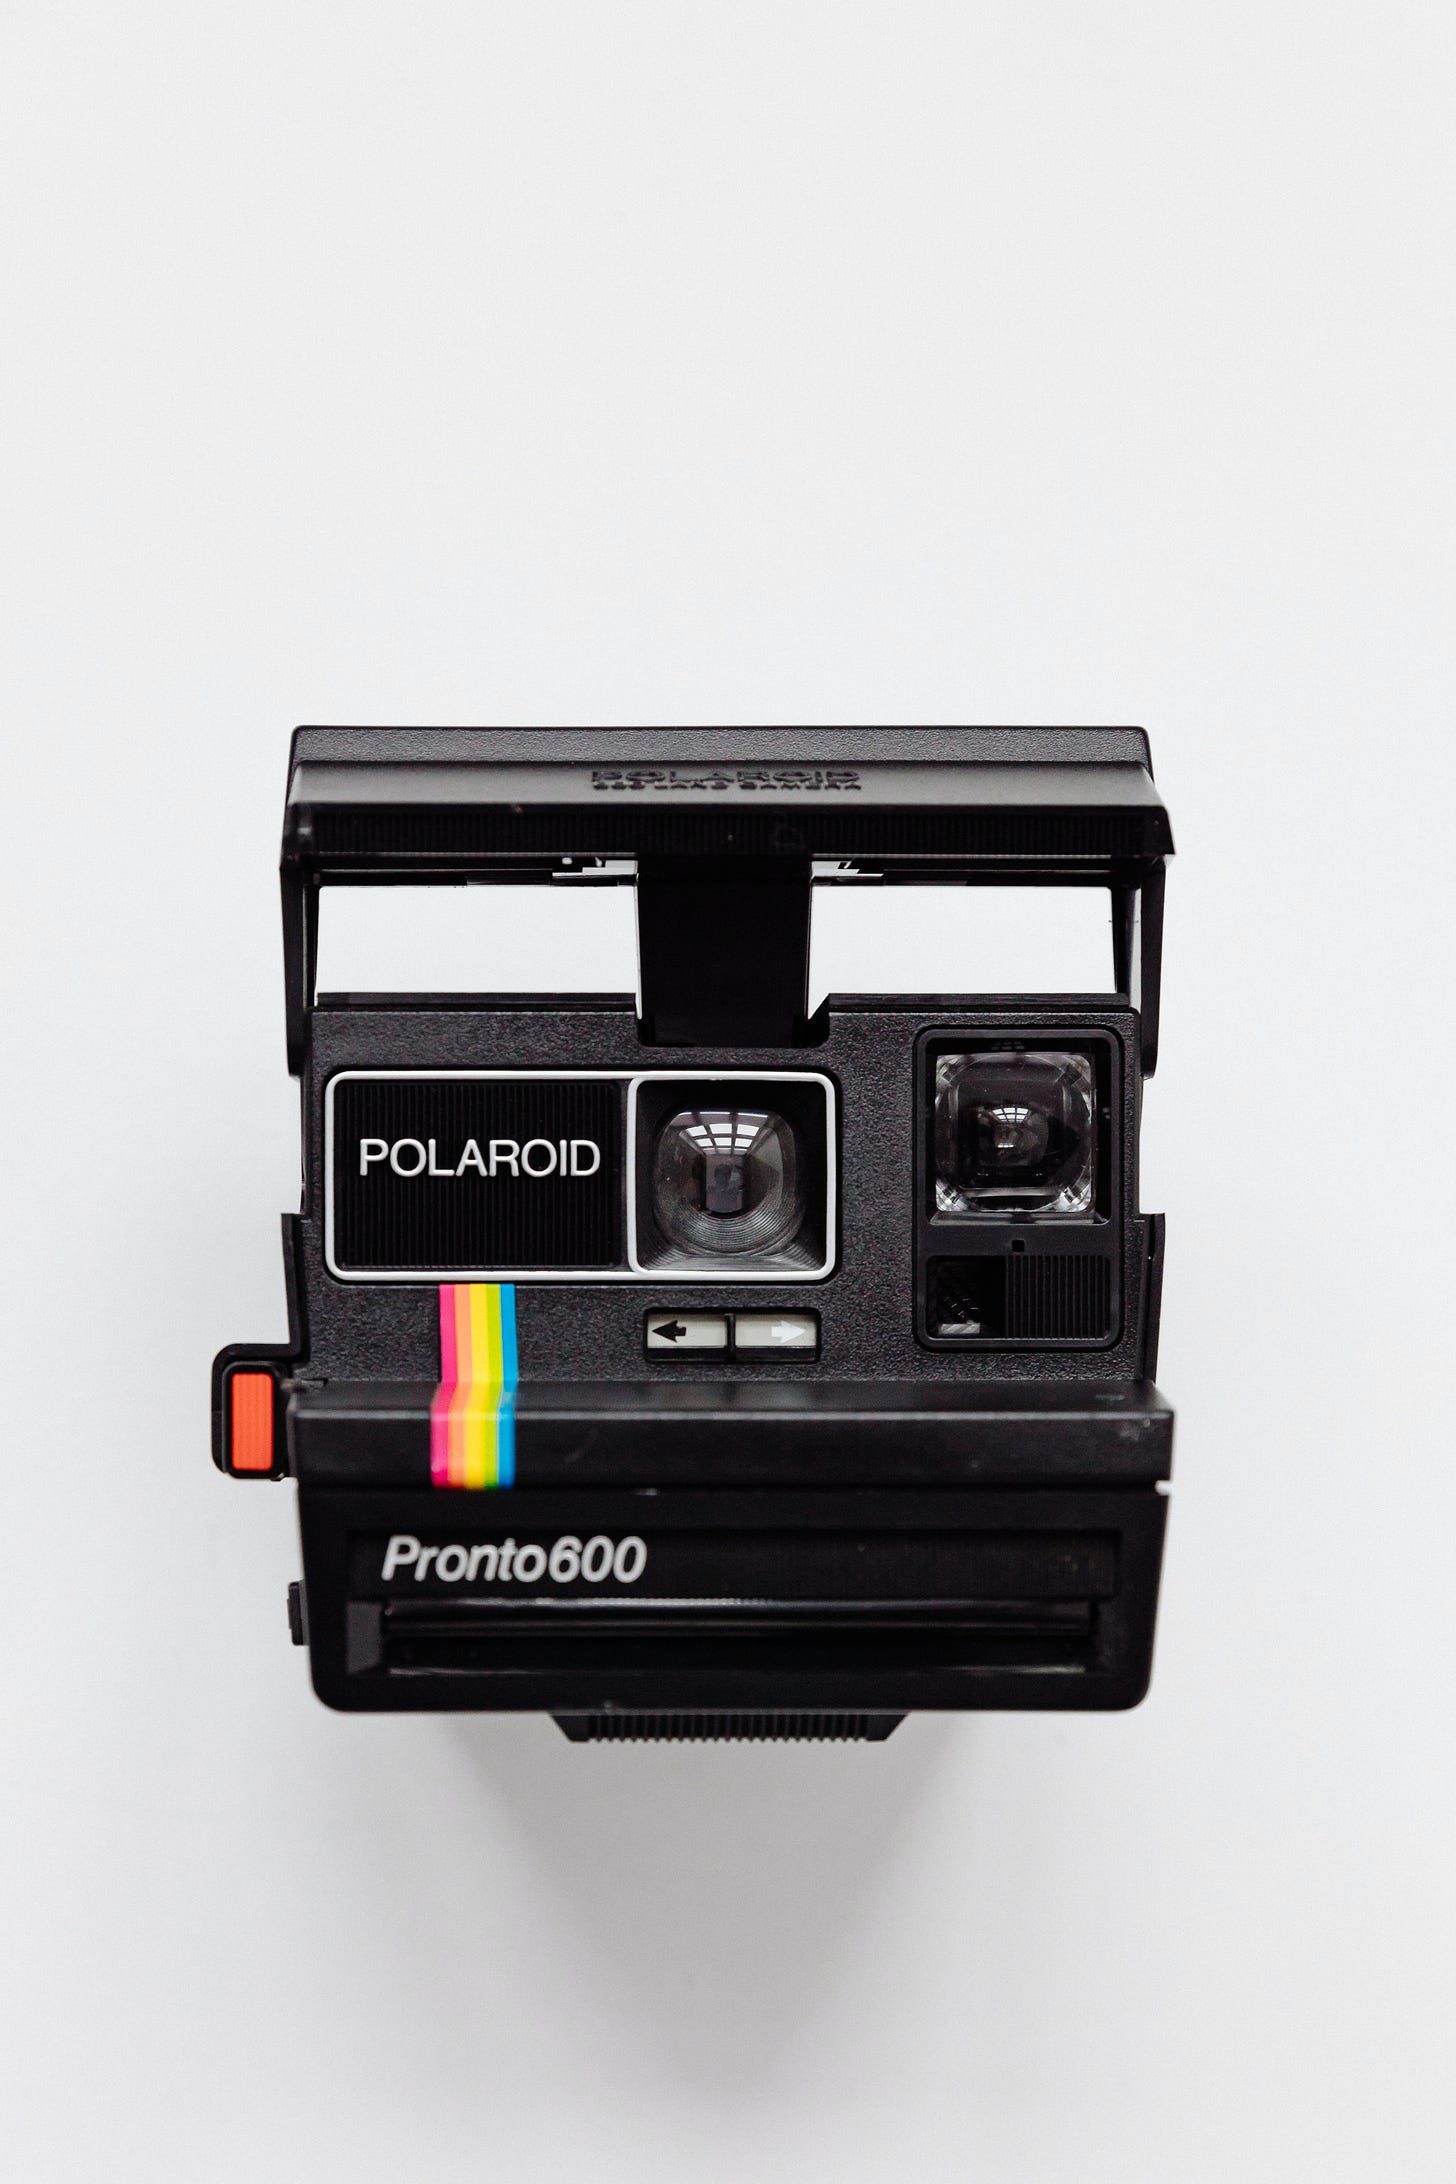 Retro Polaroid camera